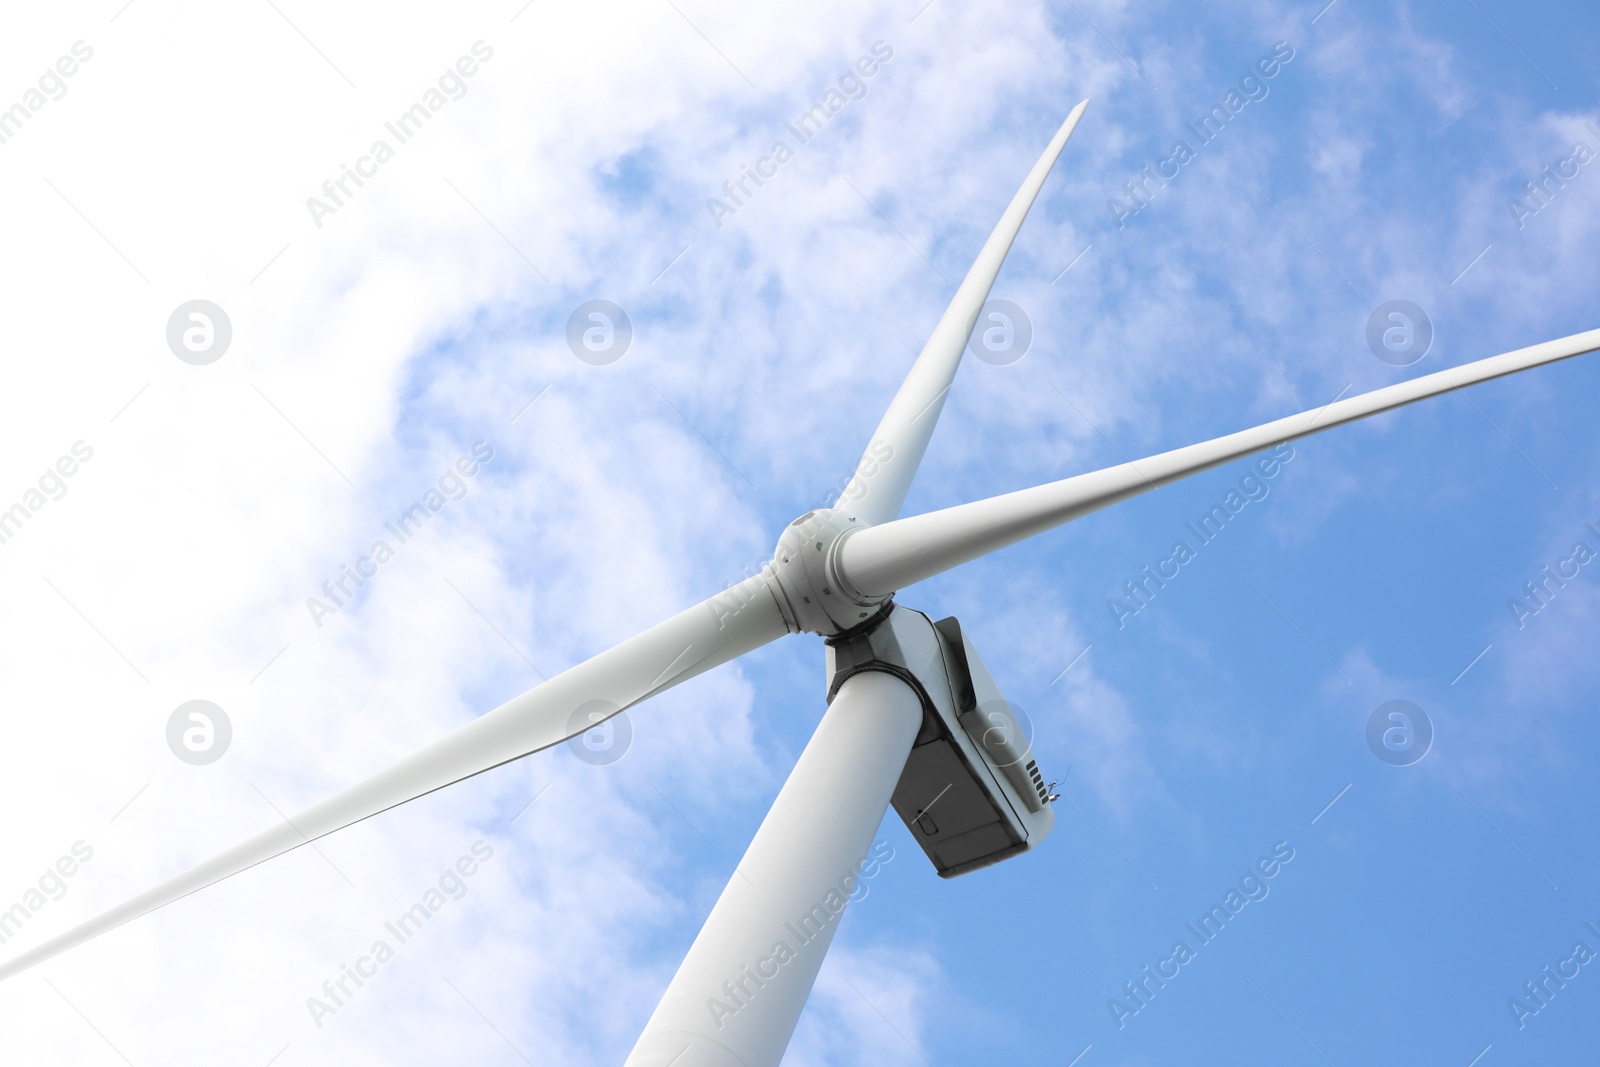 Photo of Wind turbine against beautiful blue sky, low angle view. Alternative energy source